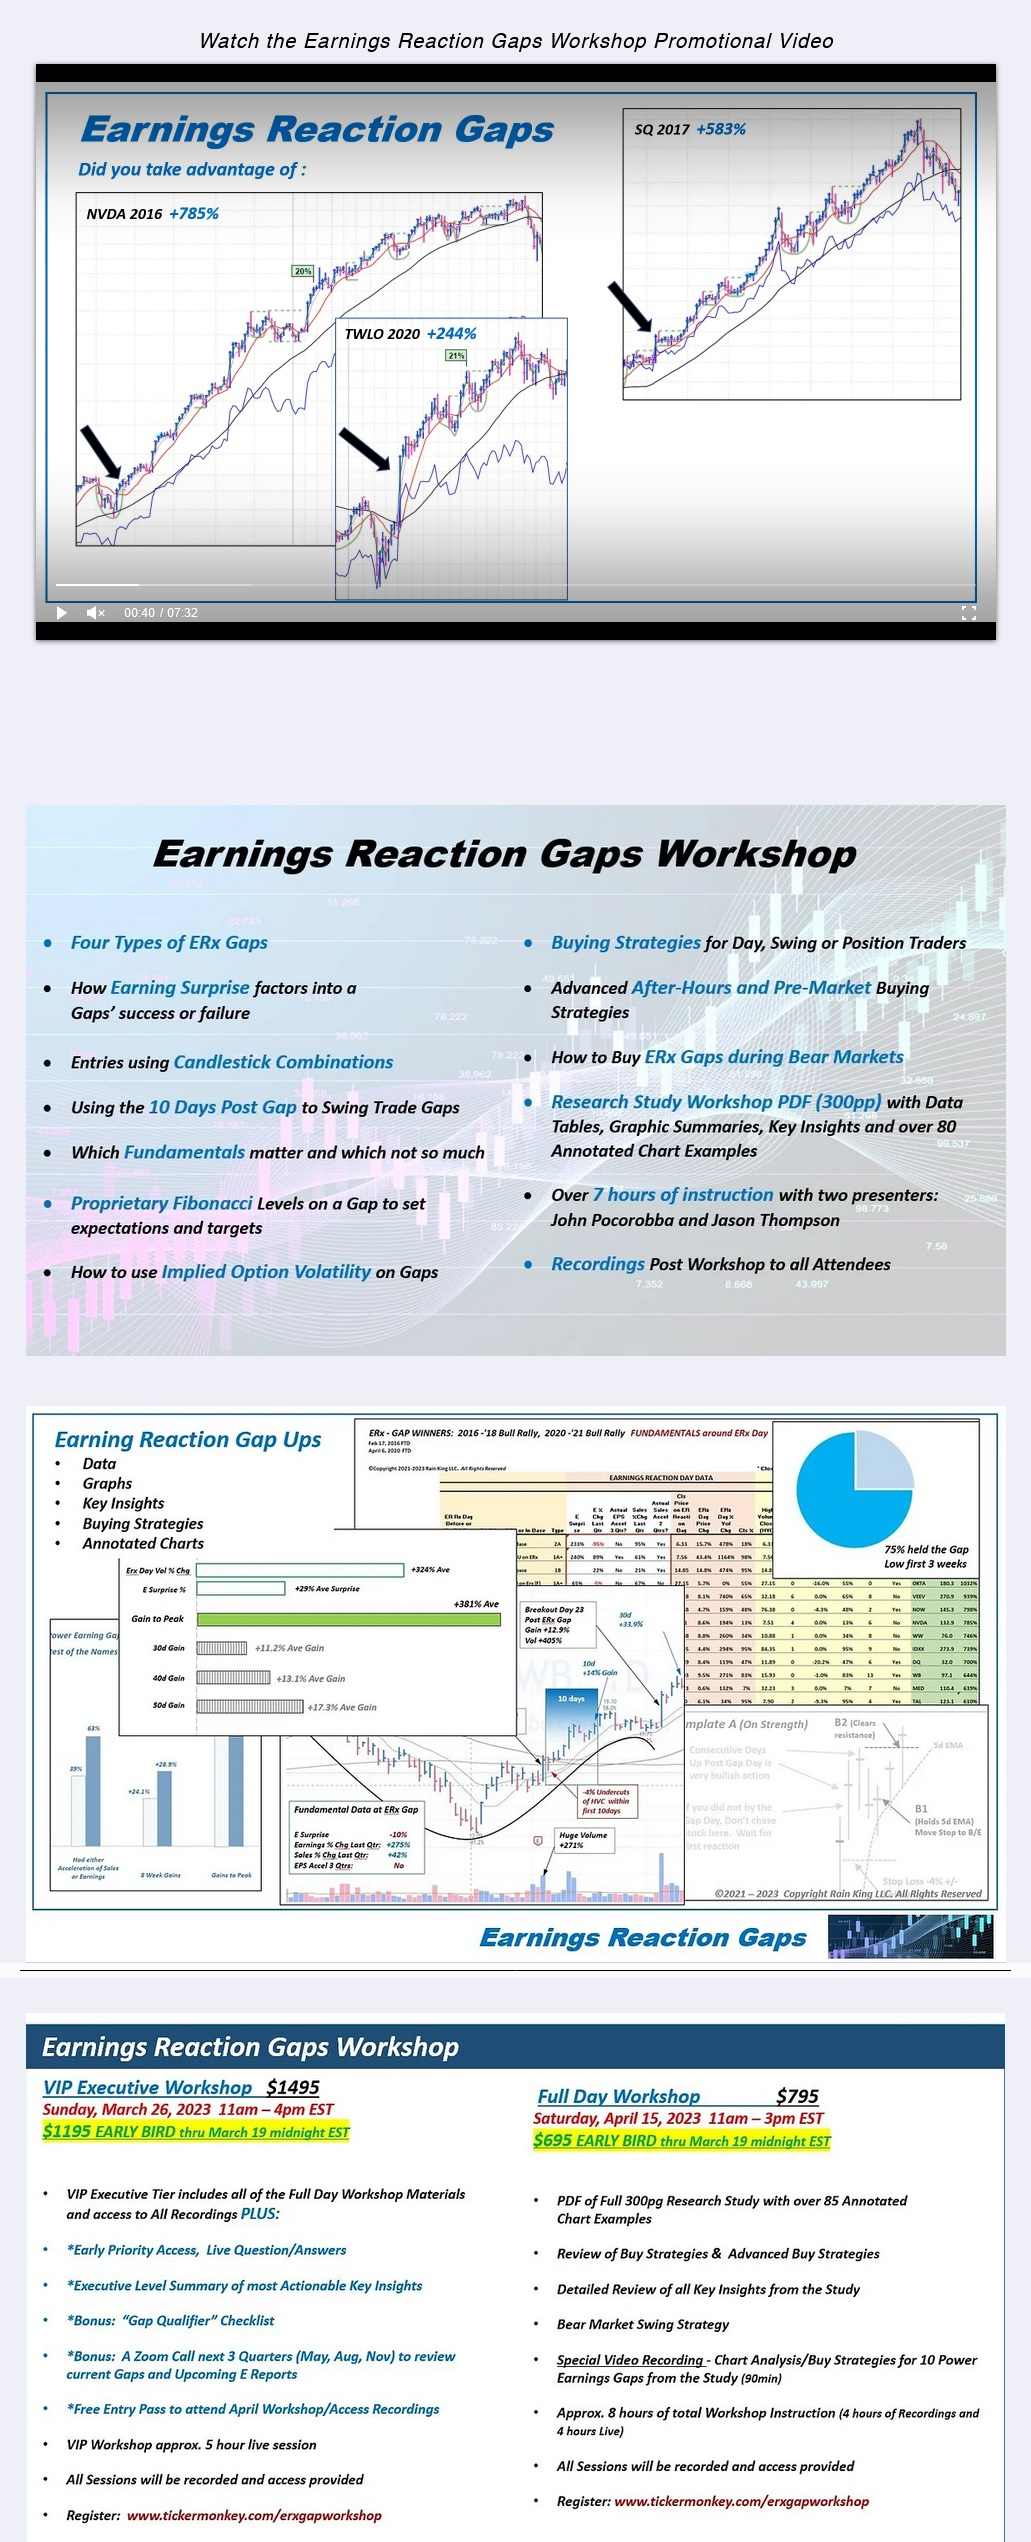 John-Pocorobba-Earnings-Reaction-Gaps-Workshop-1